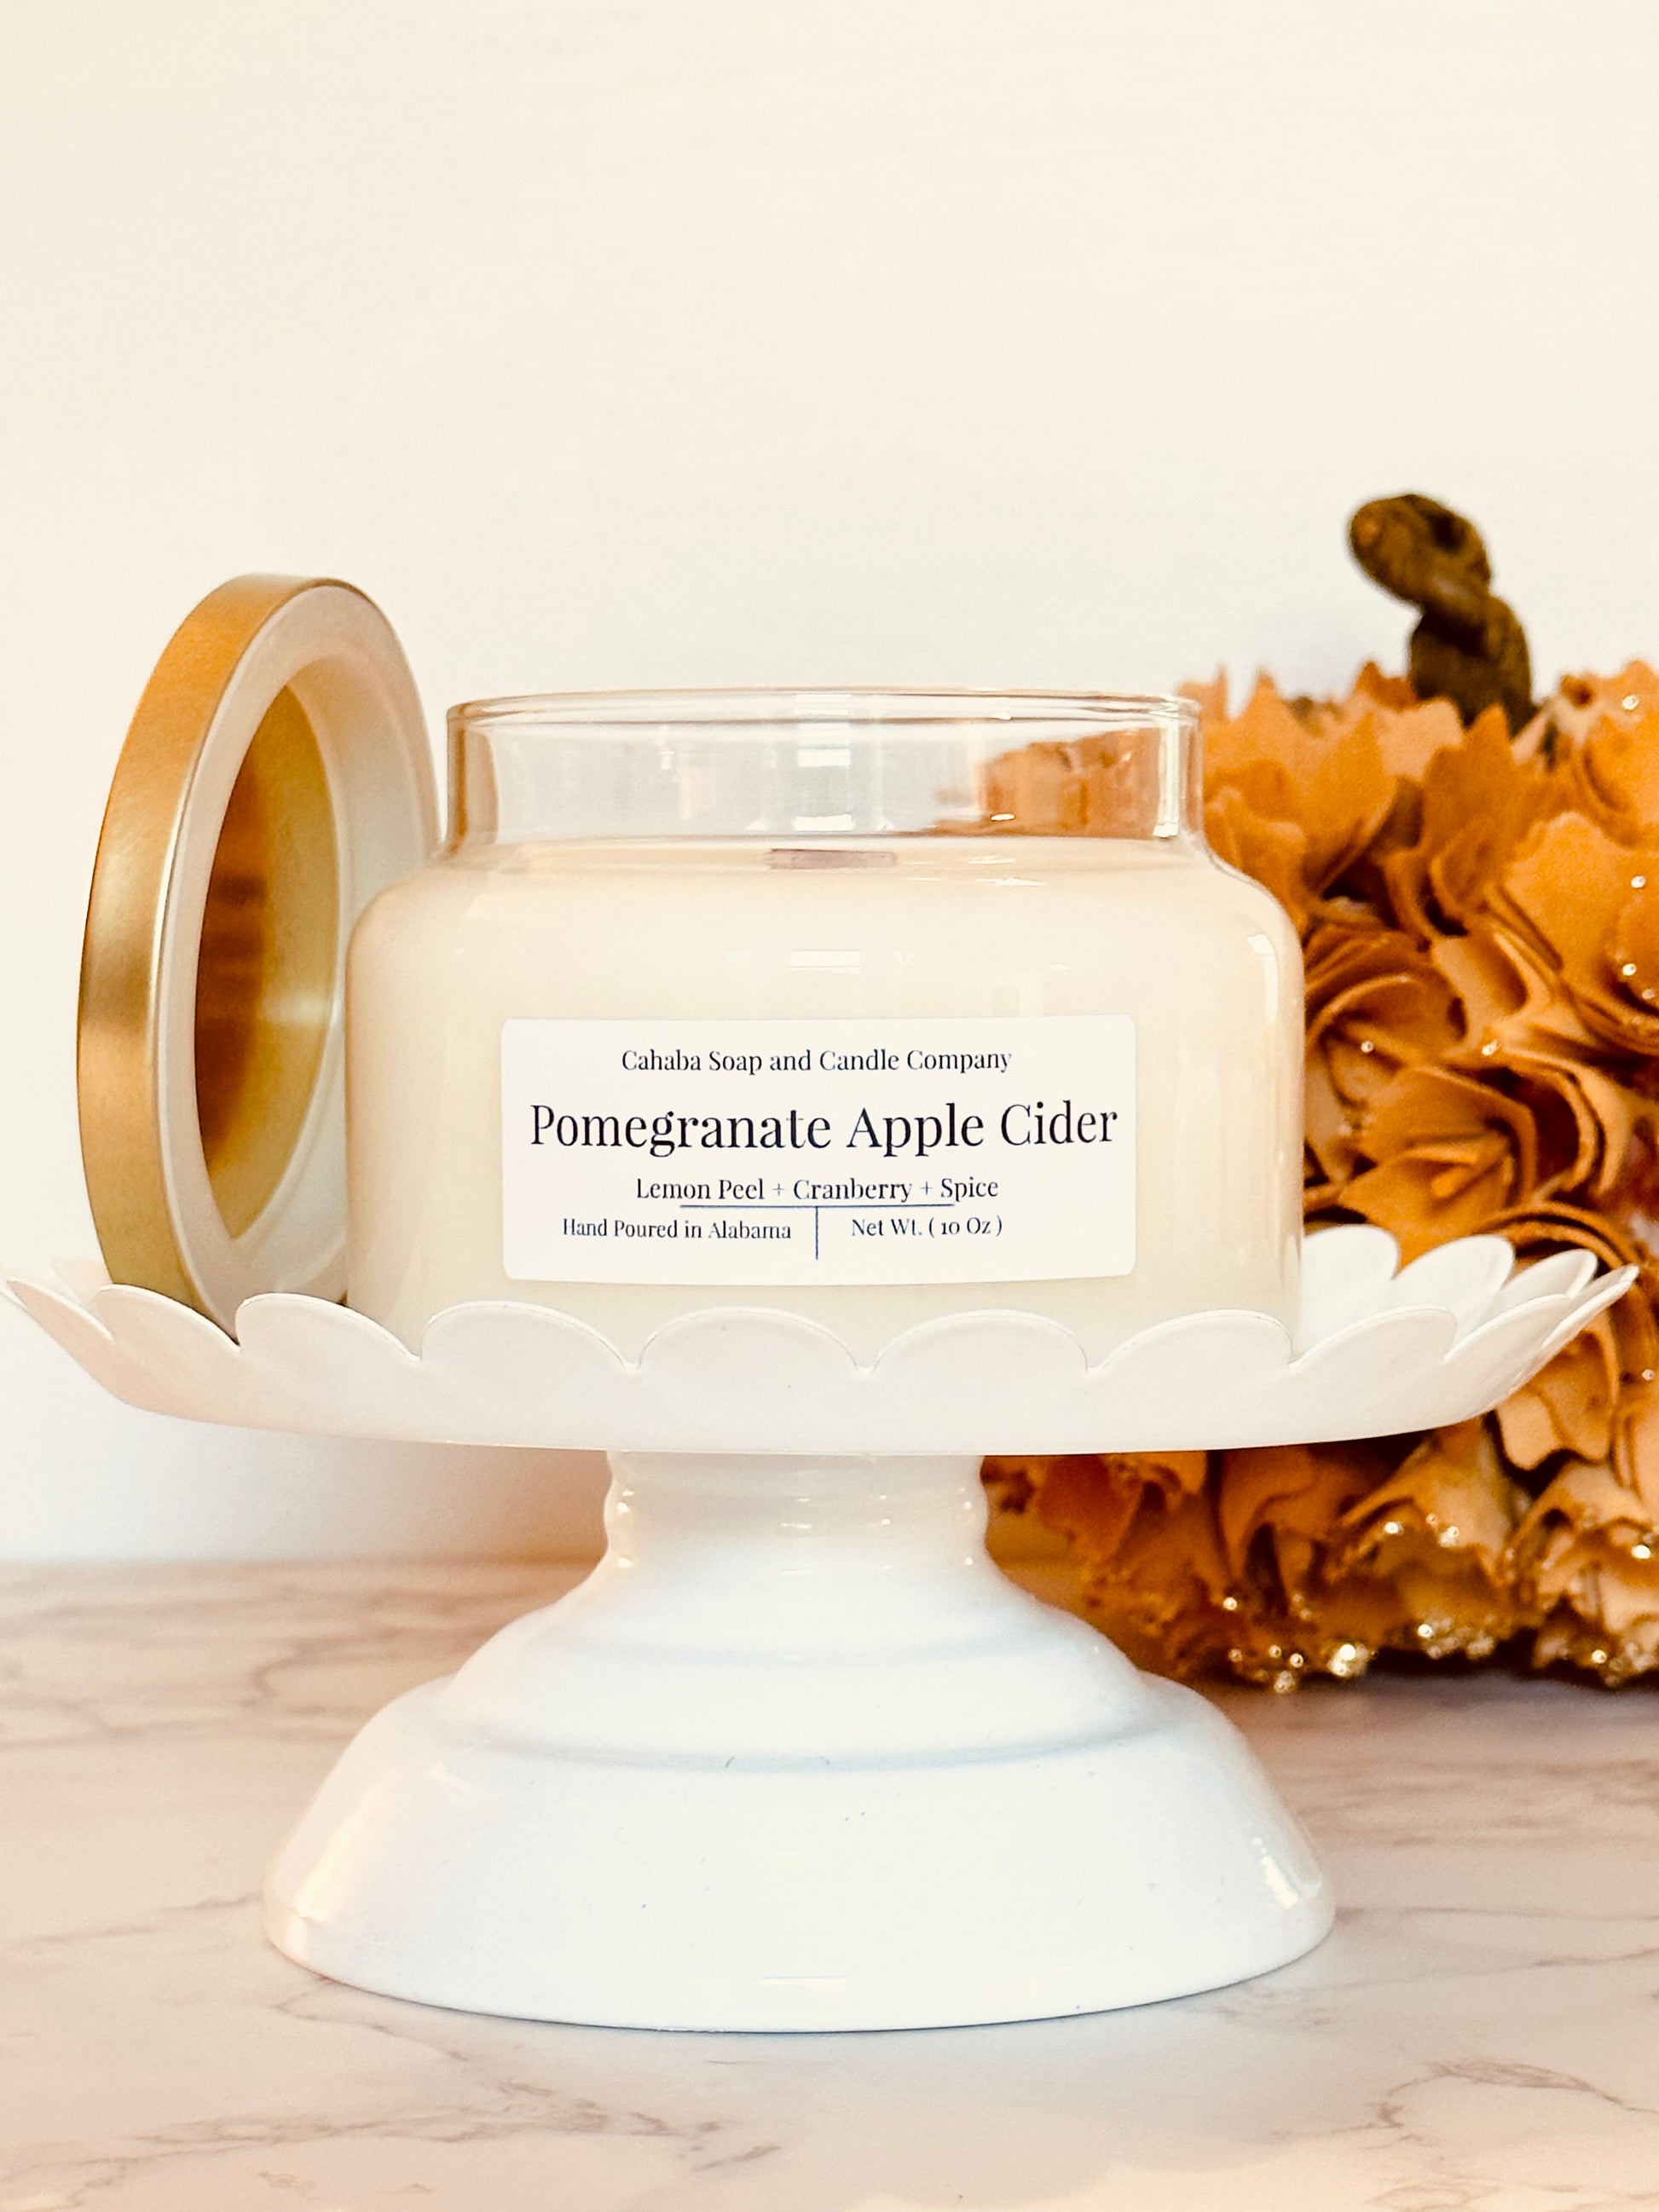 Pomegranate Apple Cider - Cahaba Soap and Candle Company